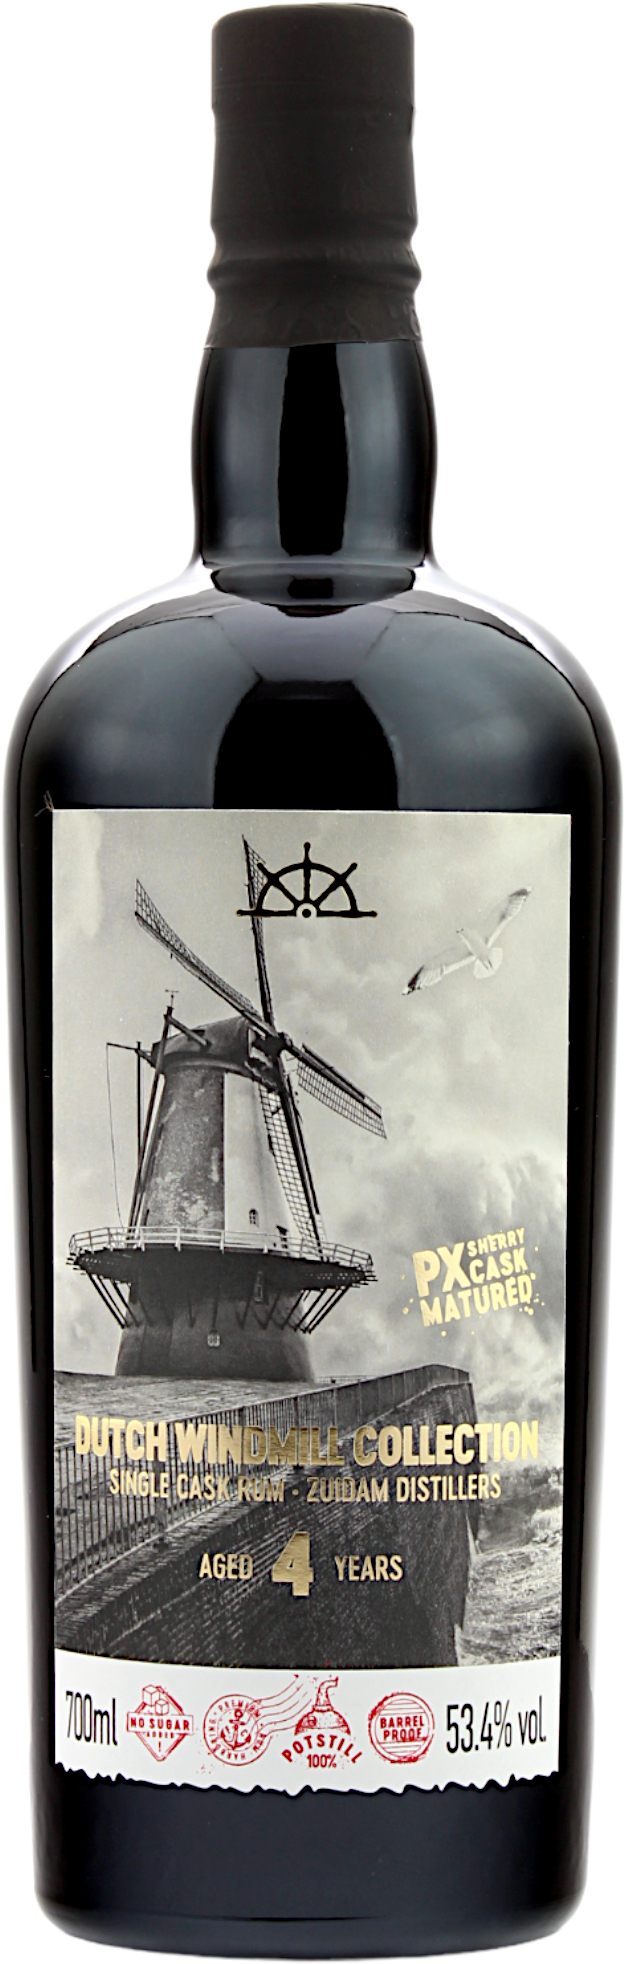 FRC 4 Jahre PX Sherry Cask Zuidam Distillers Rum Dutch Windmill Collection 53.4% 0,7l